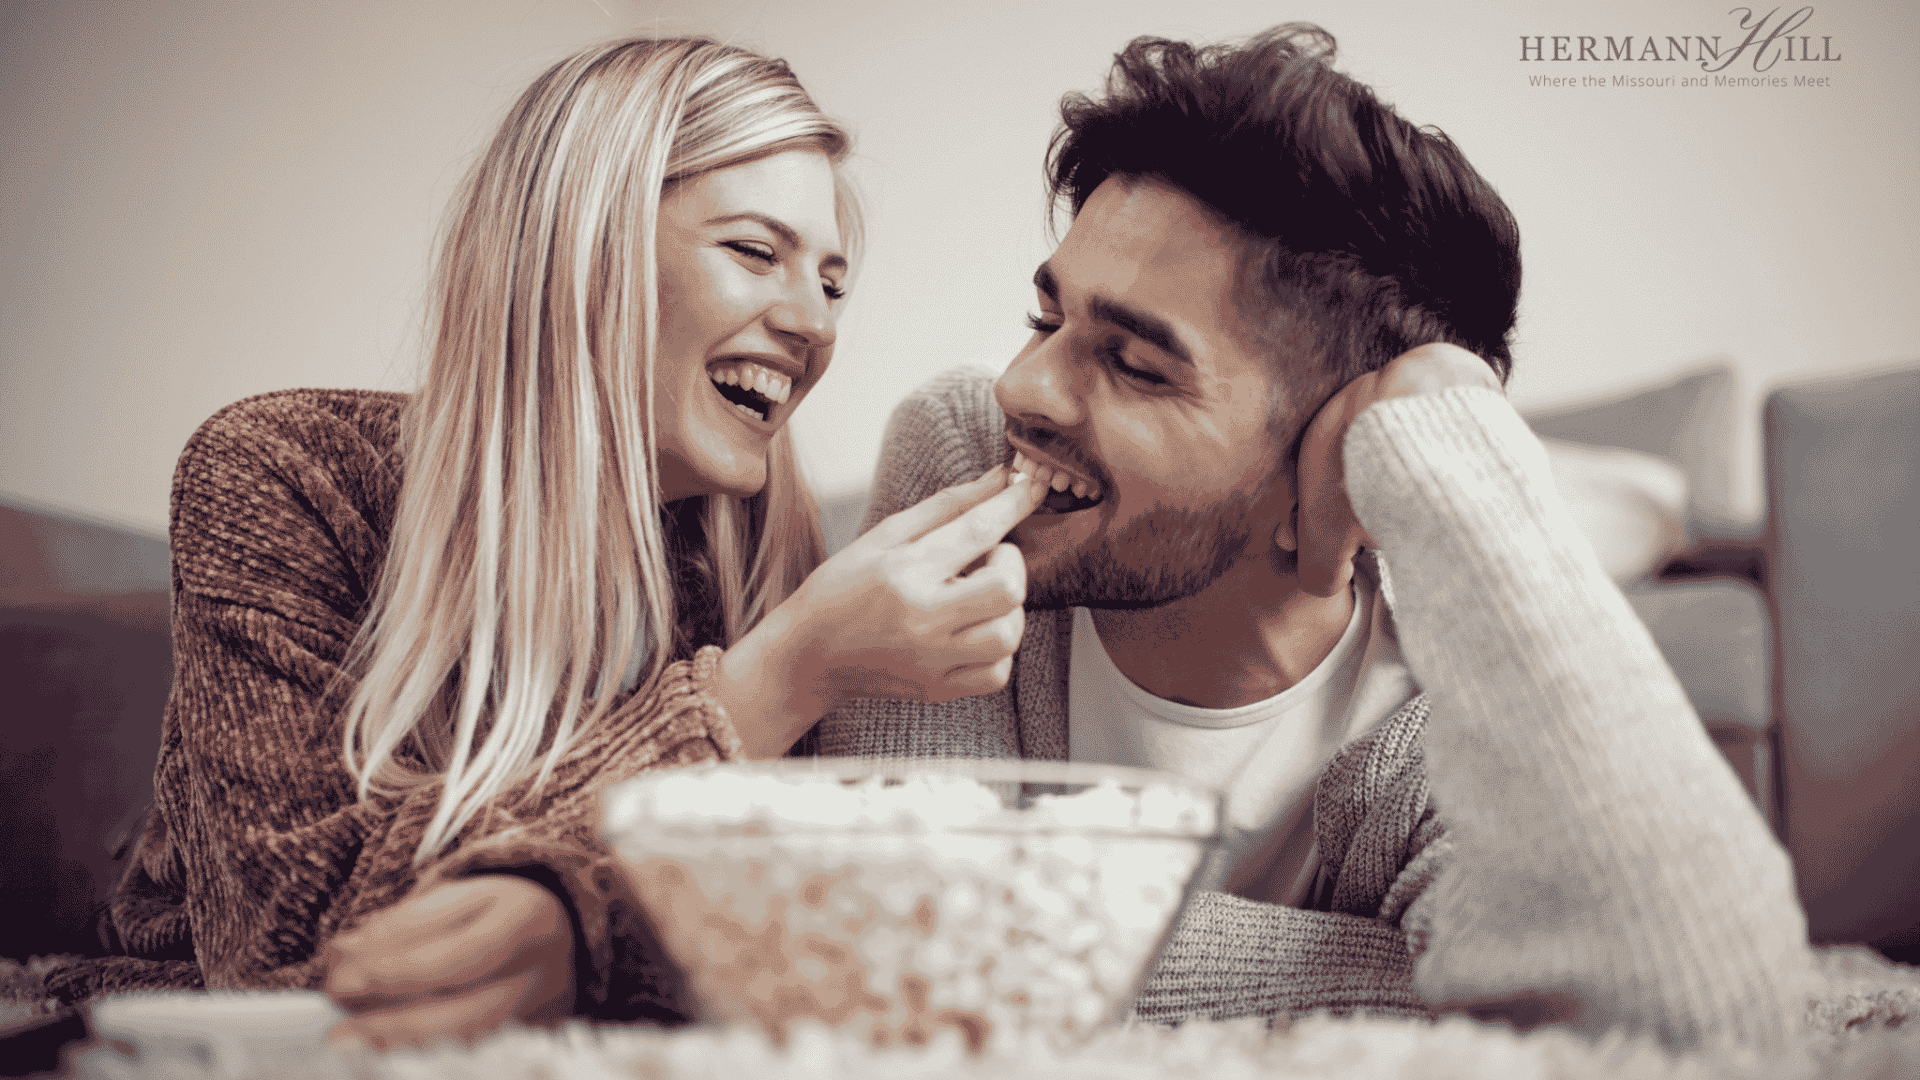 couple eating popcorn